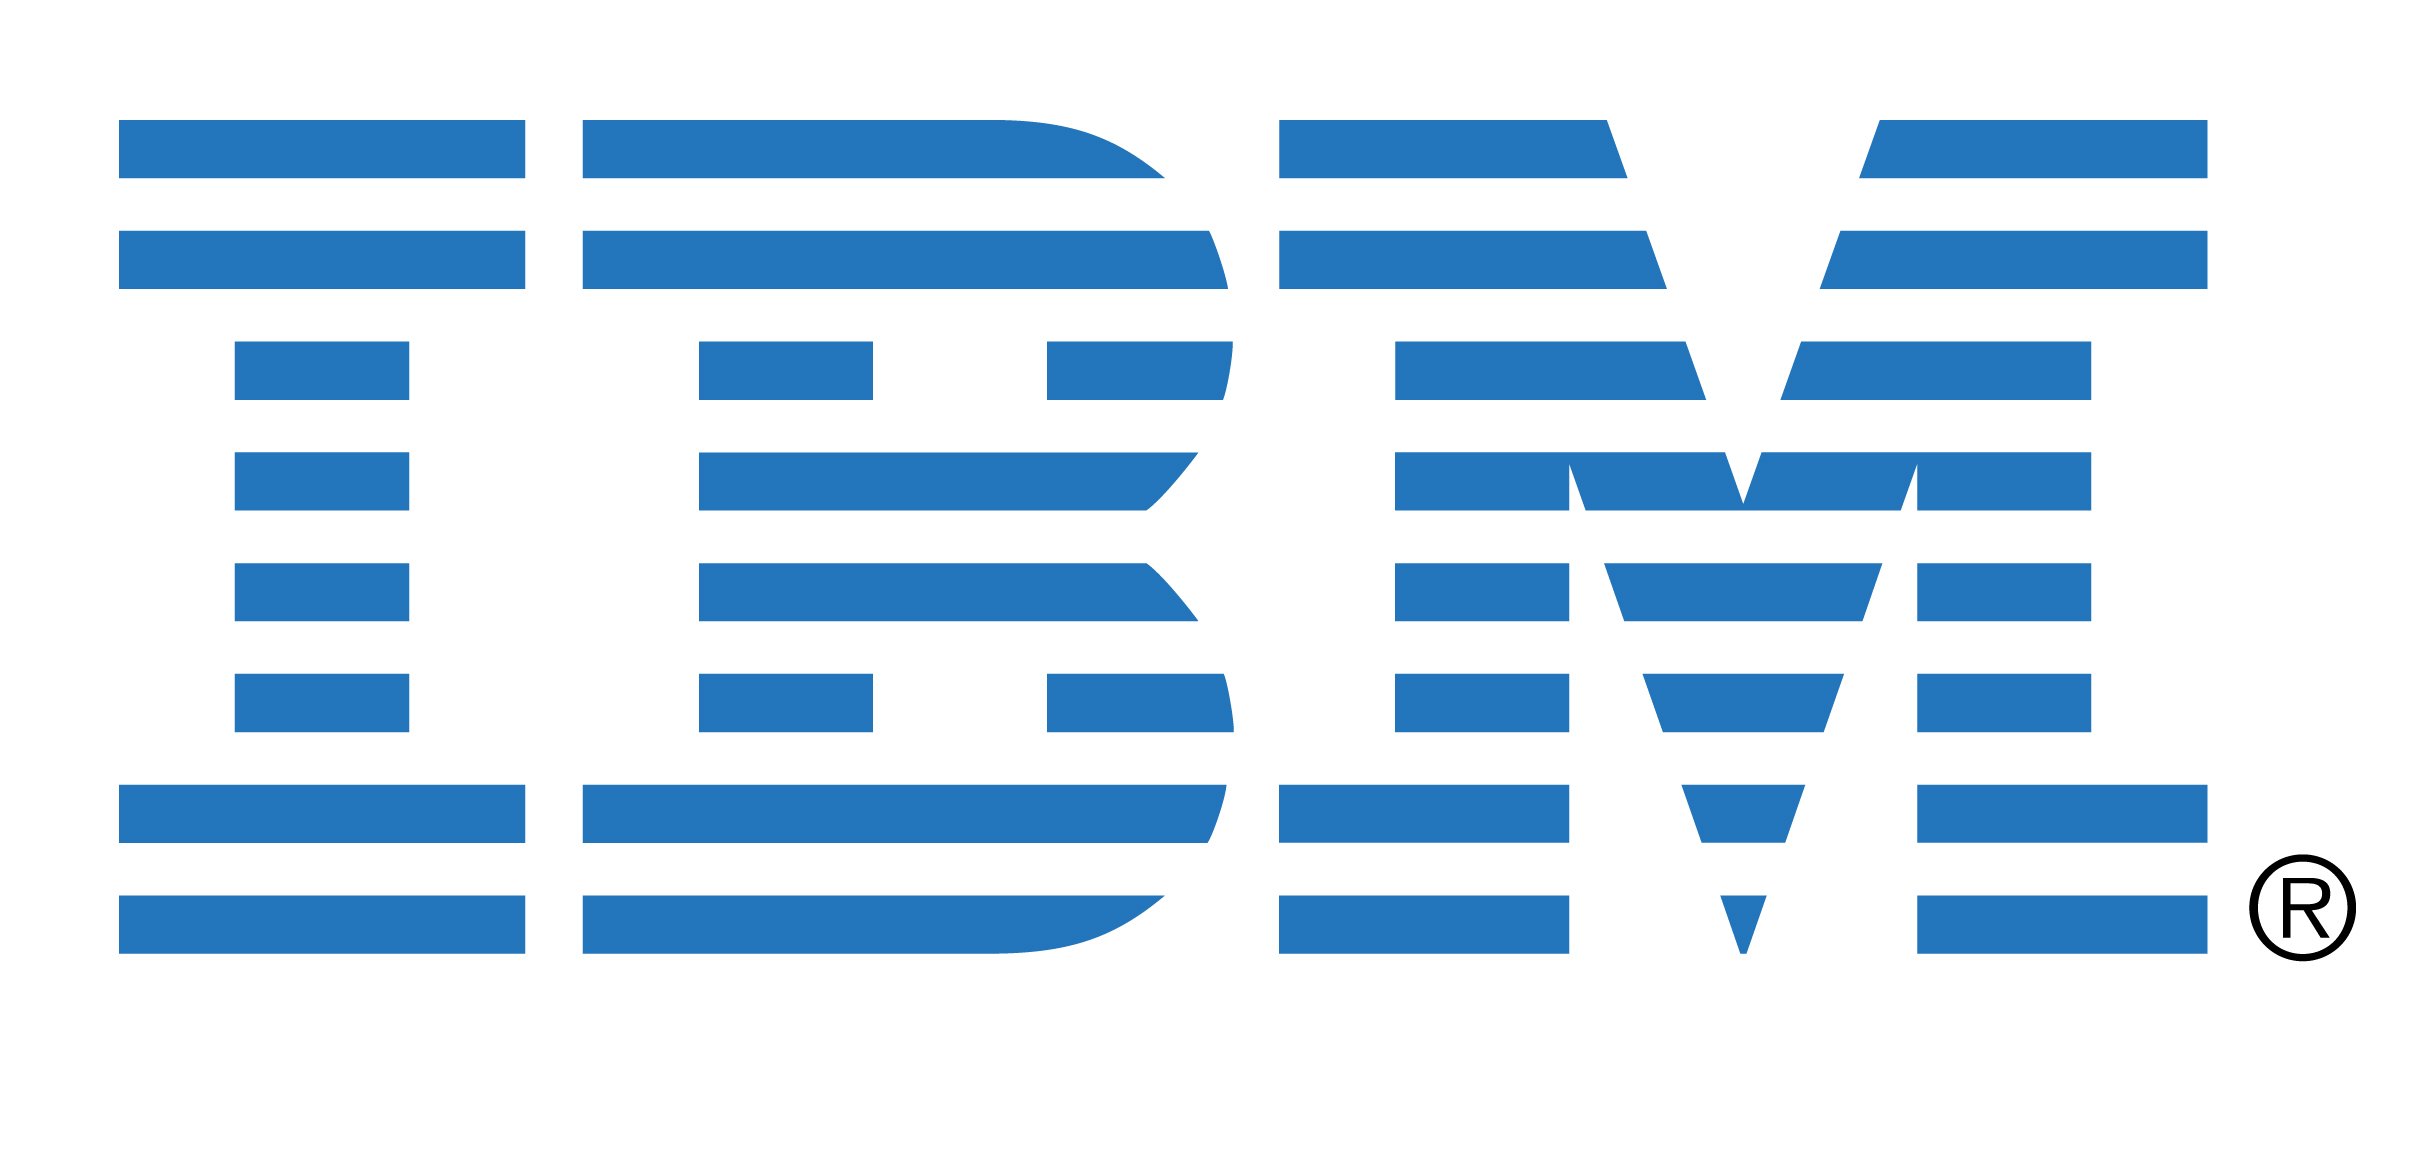 International Business Machines Corporation IBM - Company Information